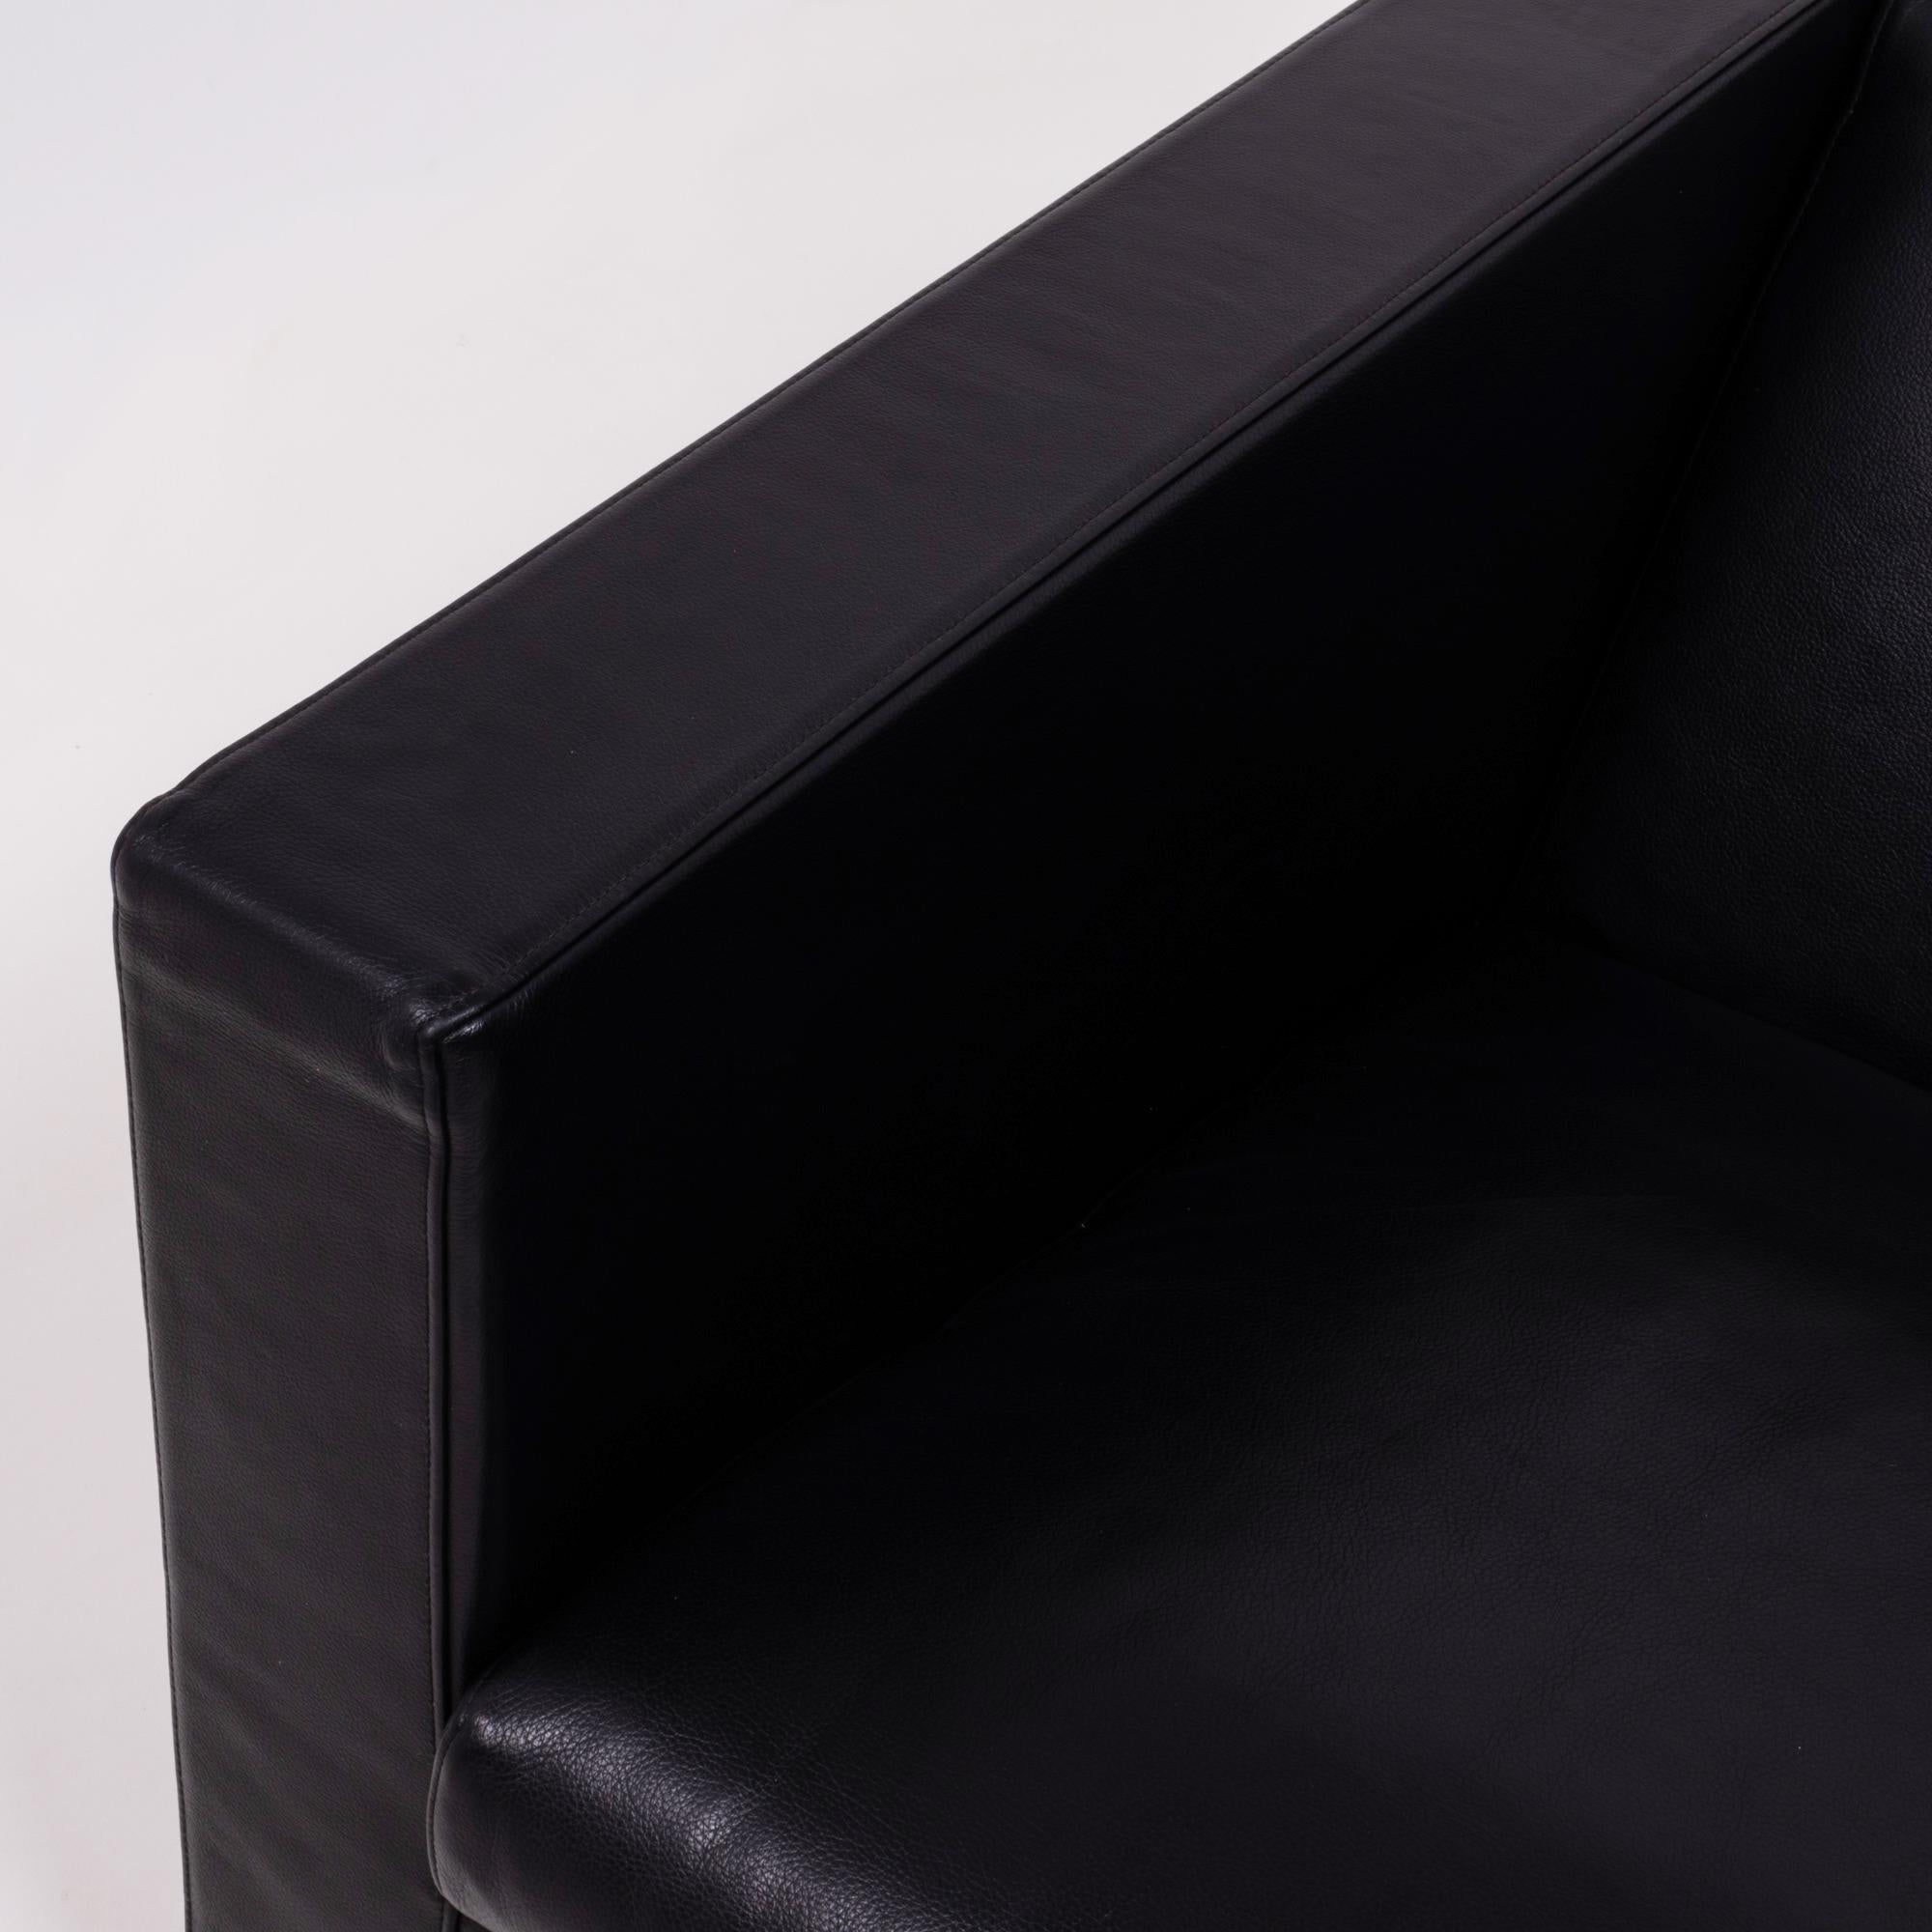 Leather Klee Black Armchair by Rodolfo Dordoni for Minotti